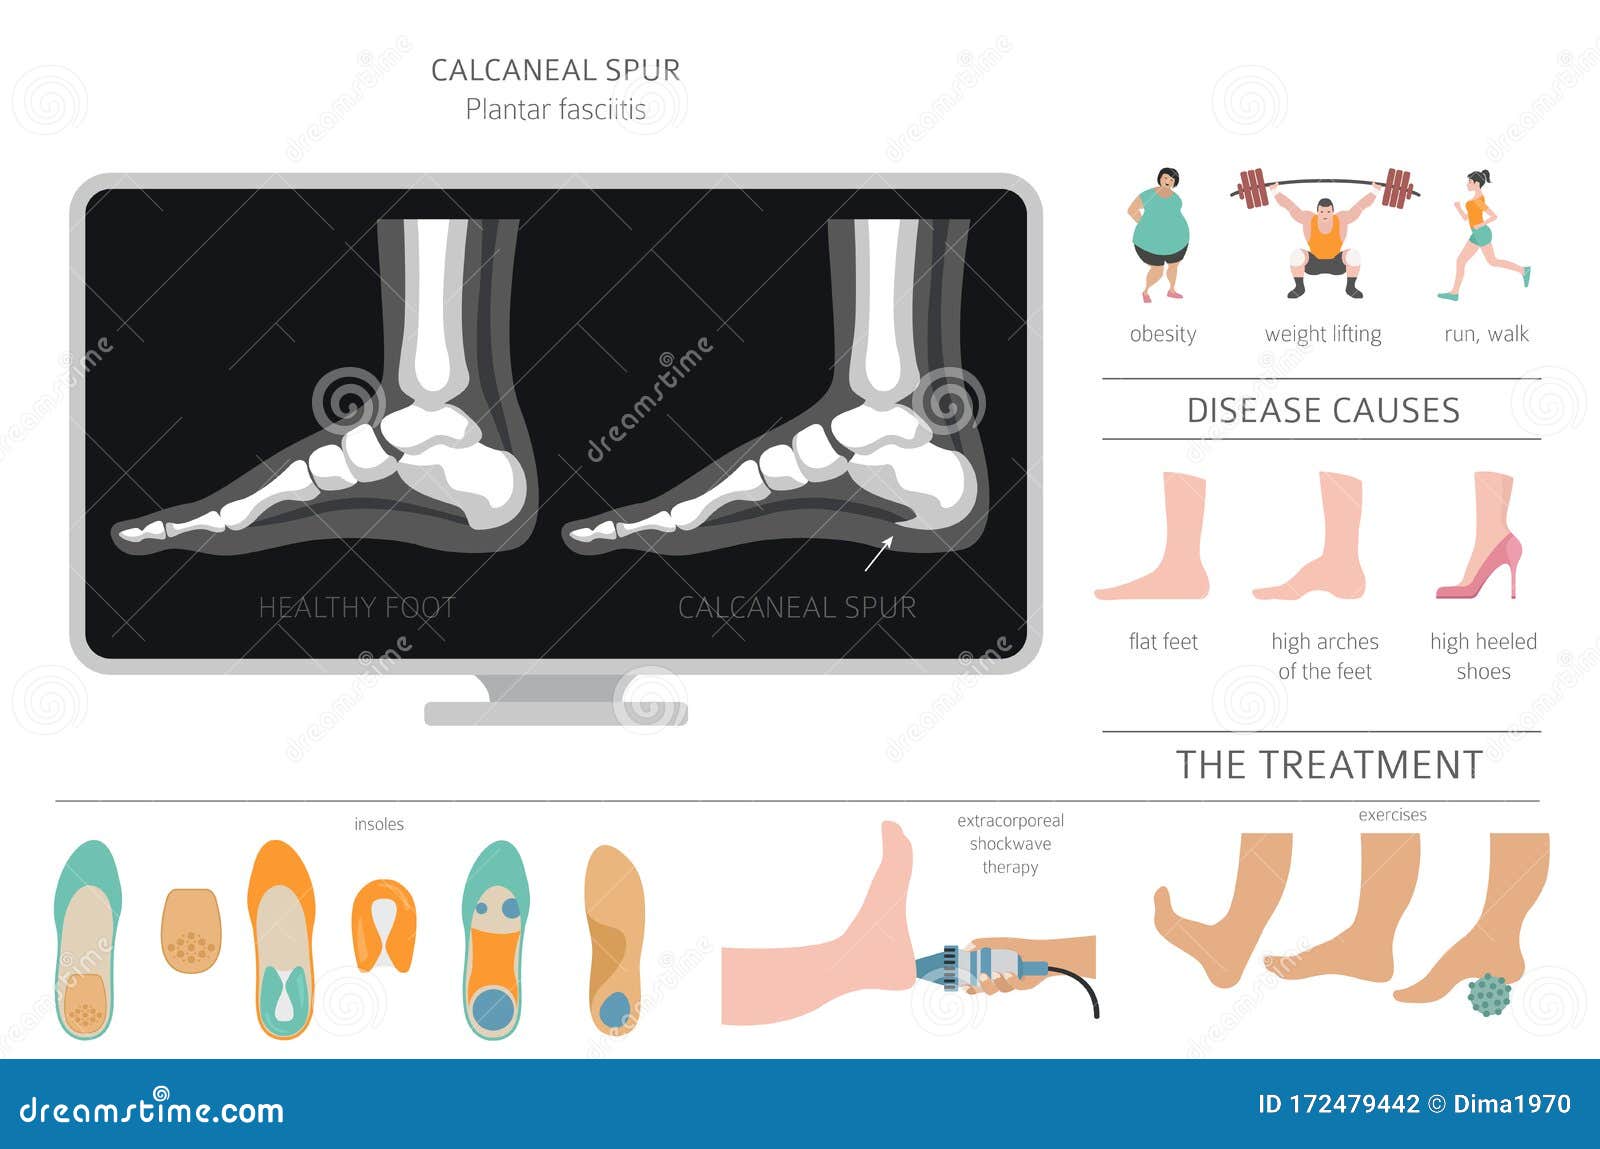 Heel spur: definition of this talalgia | Podexpert